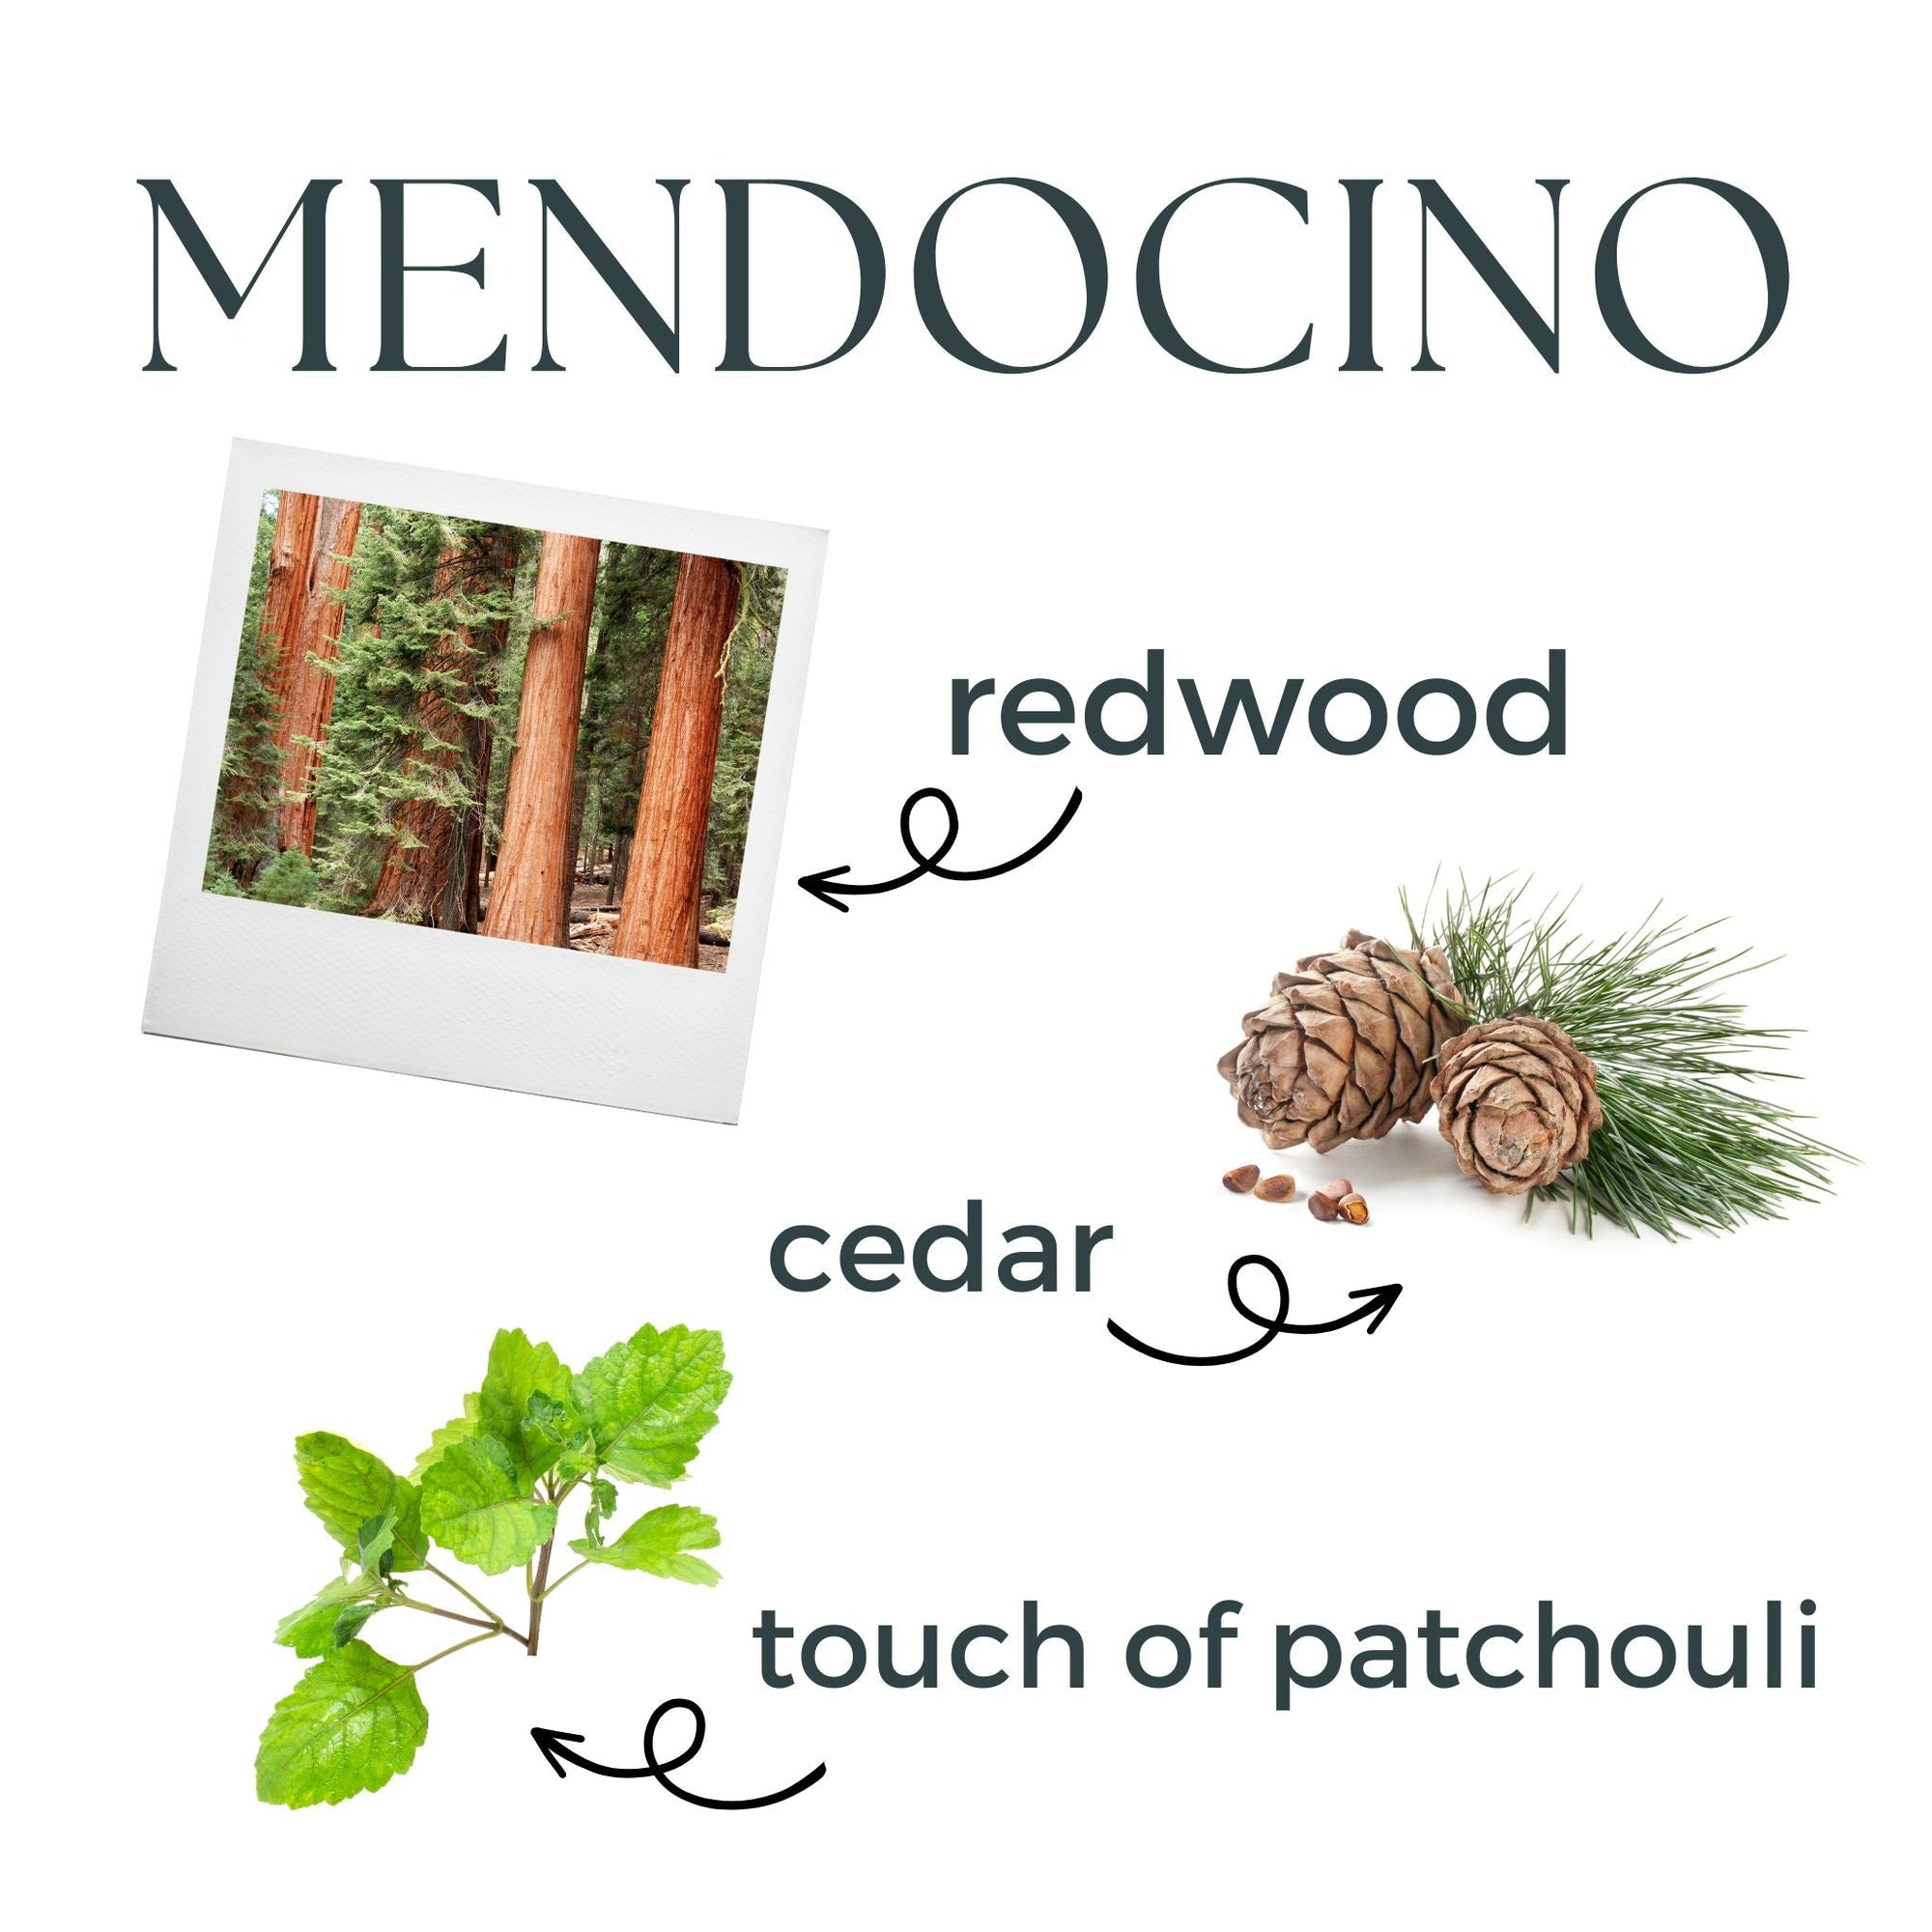 Mendocino scent description